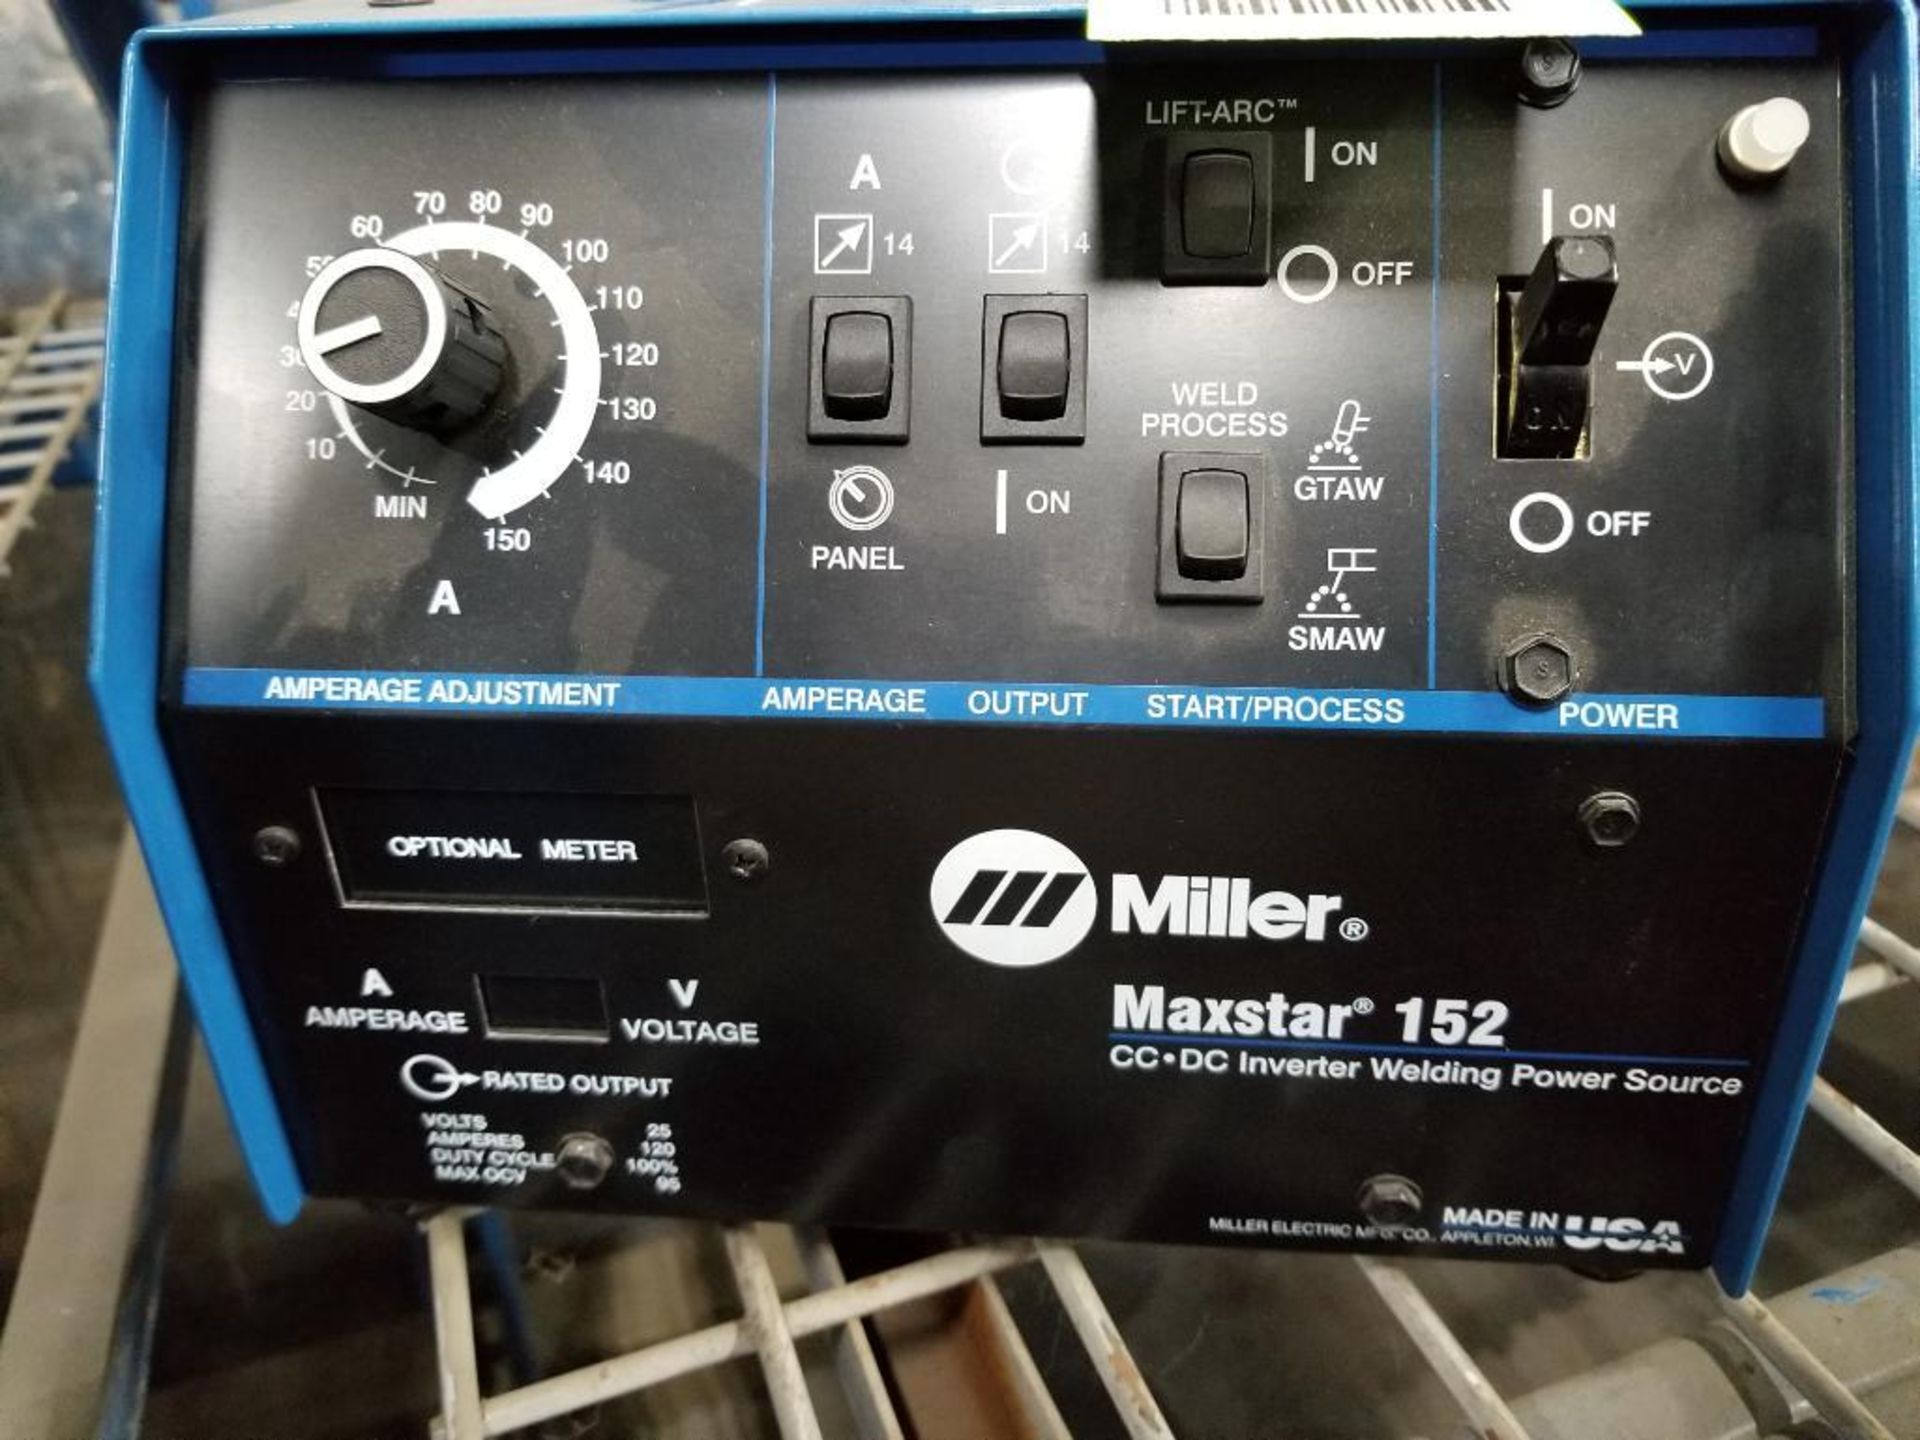 Miller Maxstar 152 CC/DC inverter welding power source. - Image 2 of 2